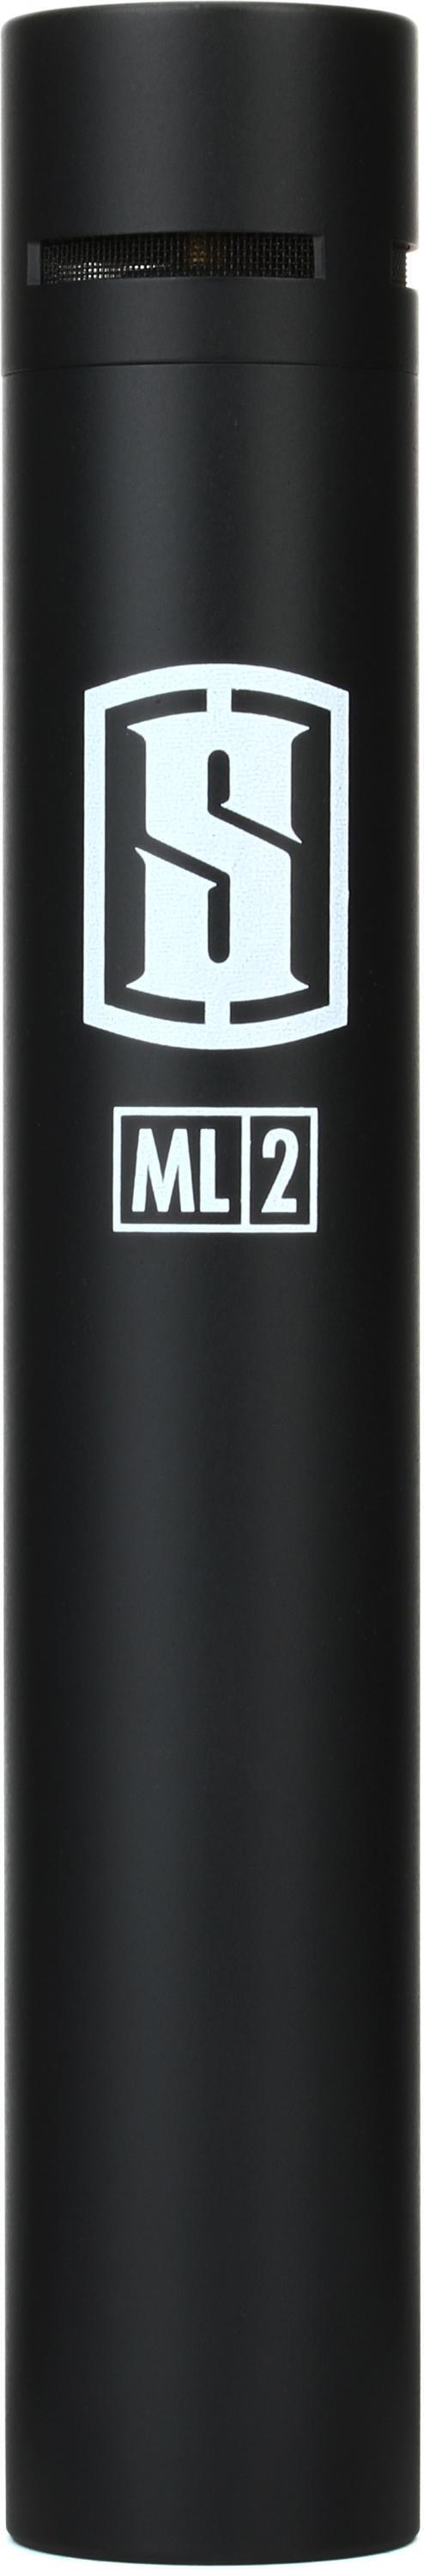 Bundled Item: Slate Digital VMS ML-2 Small-diaphragm Modeling Microphone